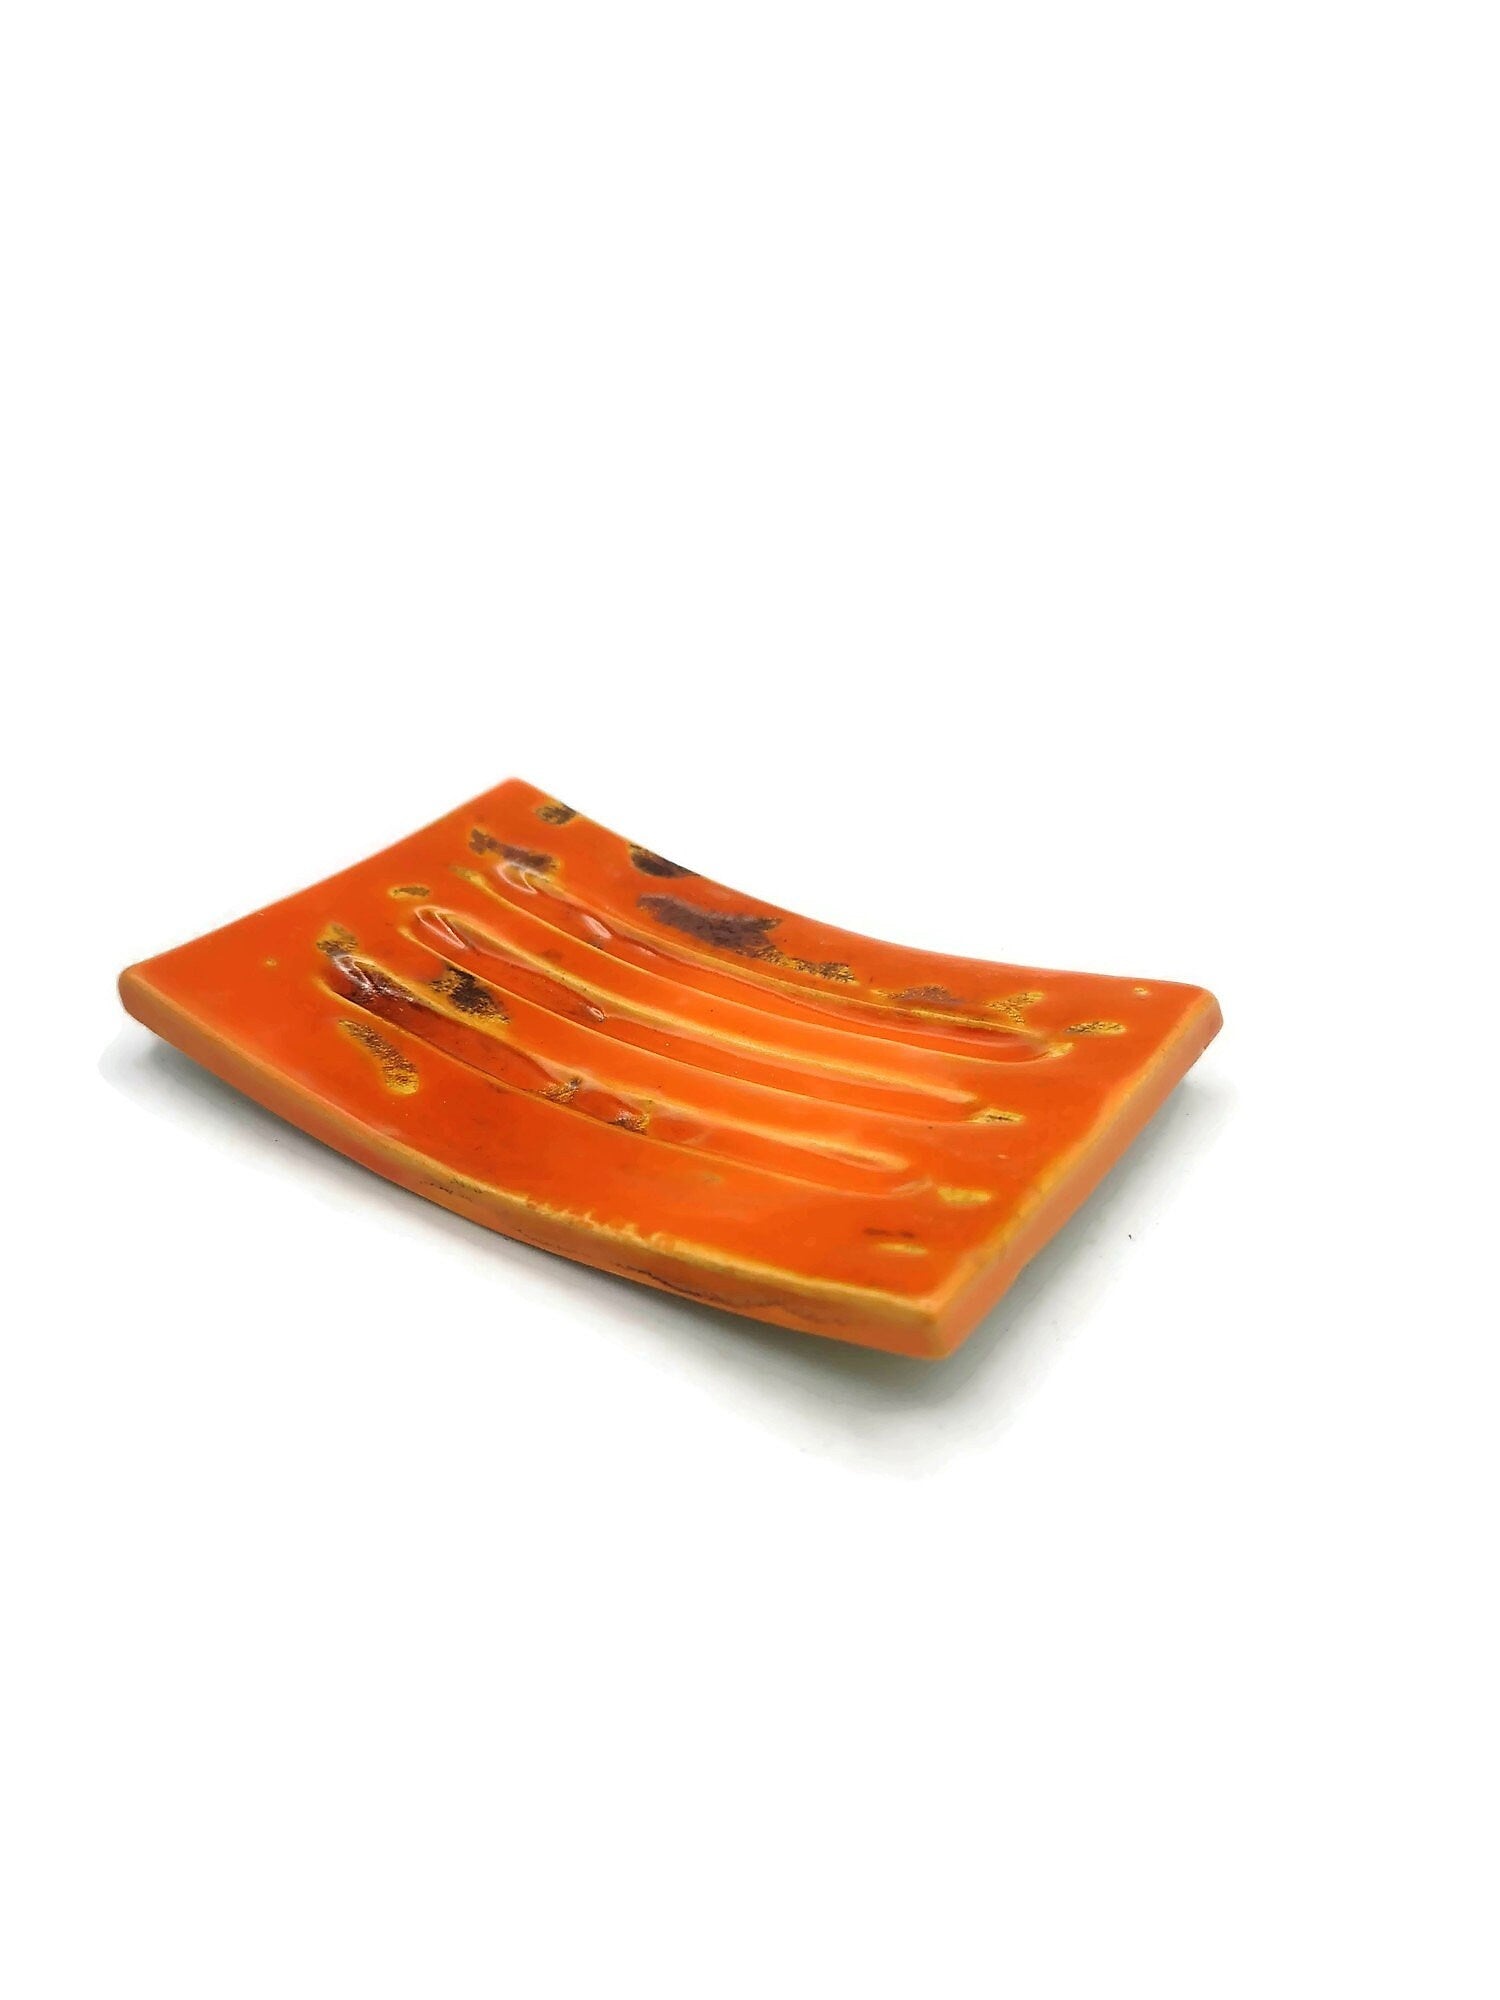 Handmade Ceramic Soap Dish Tray, Rectangle Drain Soap Saver, Artisan Sustainable Soap Bar Holder Orange w/ Copper Tones Bathroom Accessories - Ceramica Ana Rafael